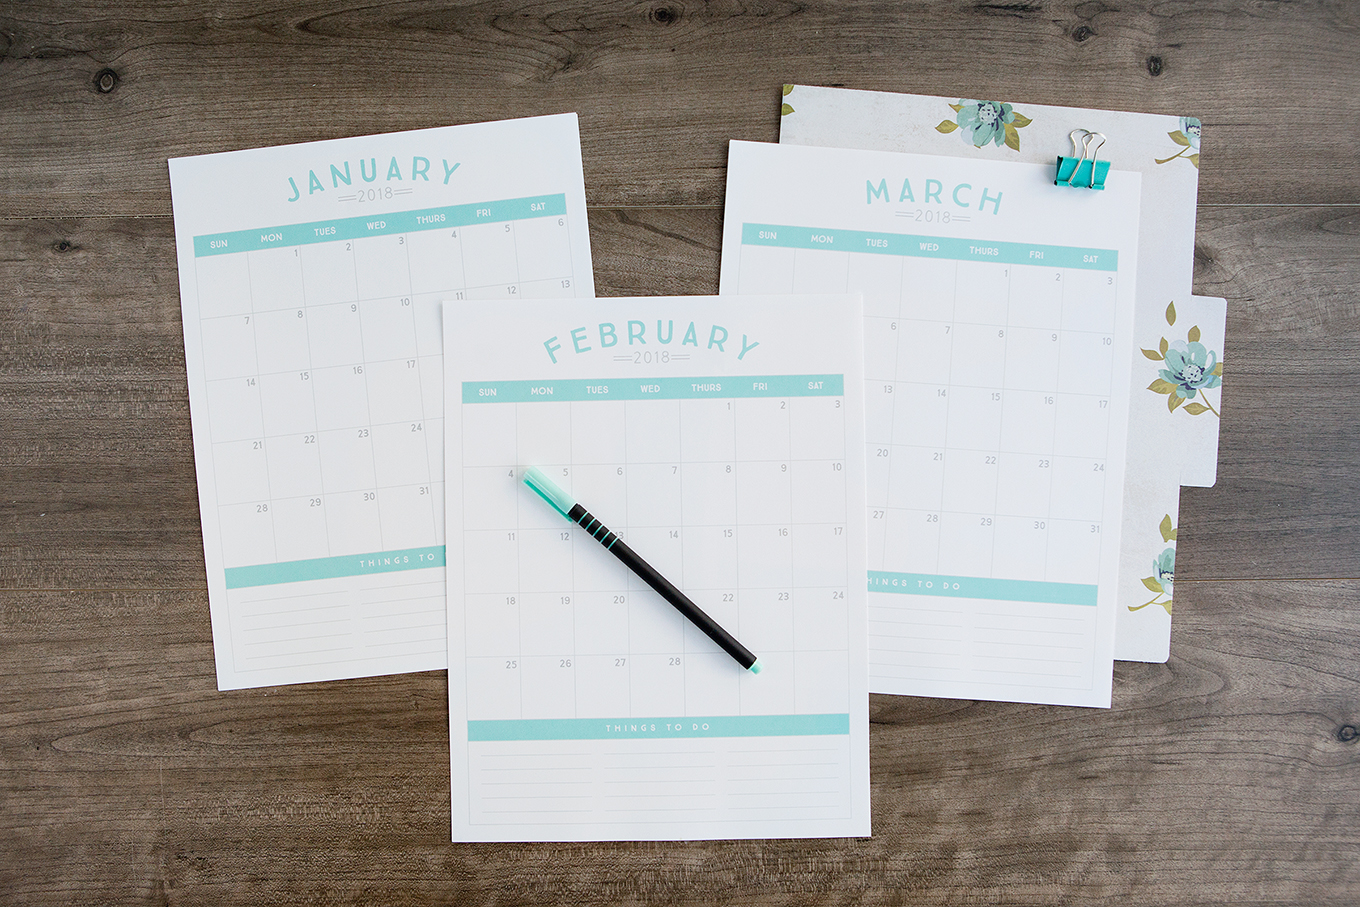 Time to get organized! FREE 2018 Printable Calendars!